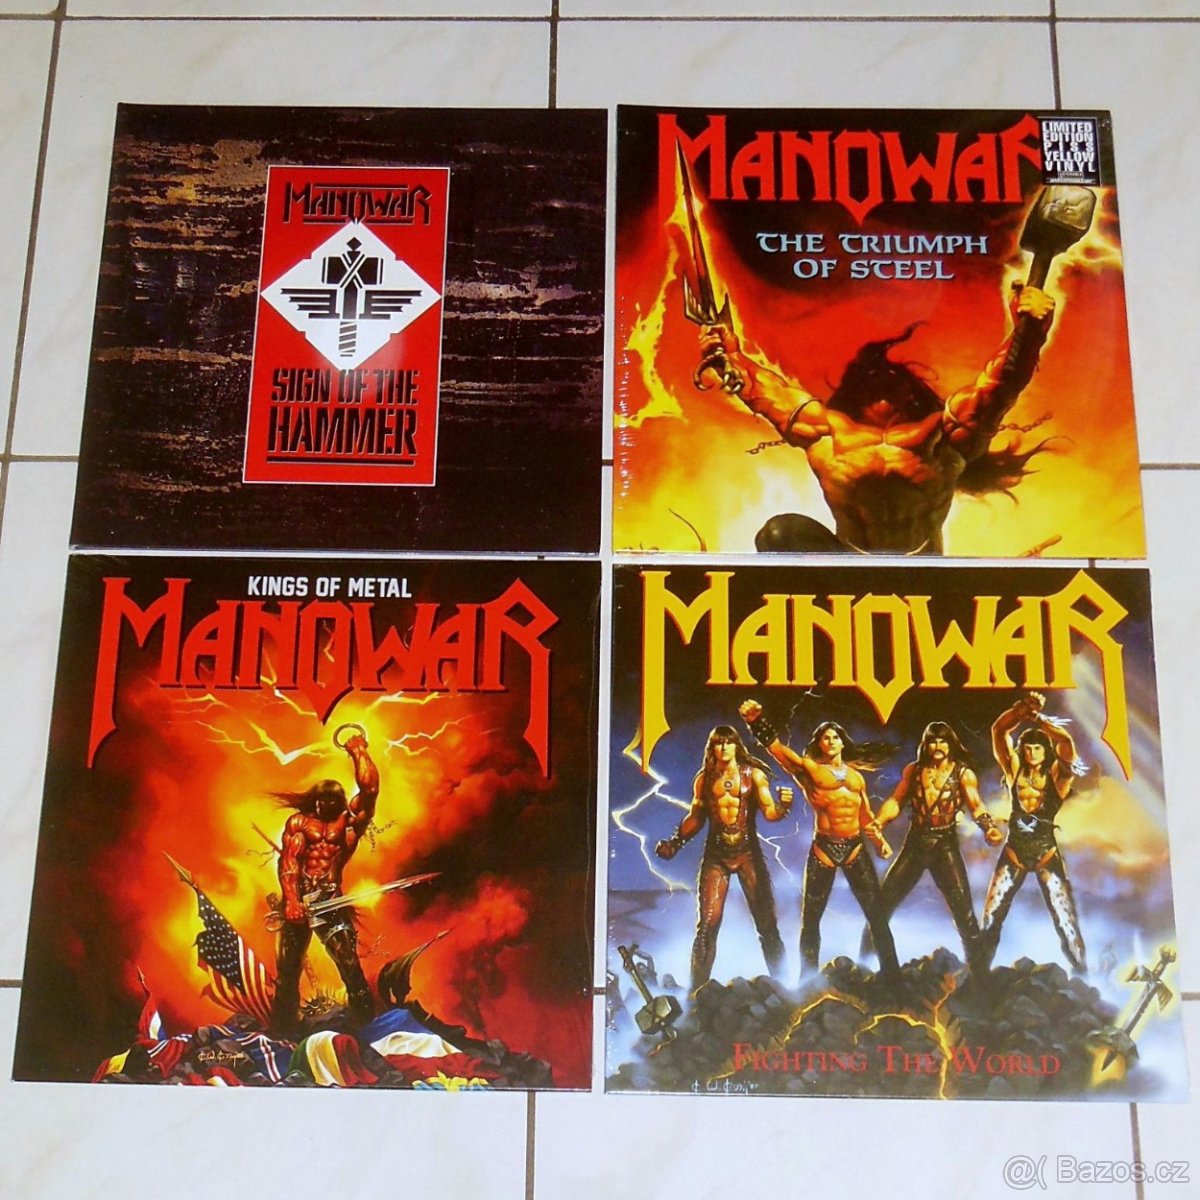 4x LP Manowar - Hammer / Fighting / Kings / Triumph Of Steel